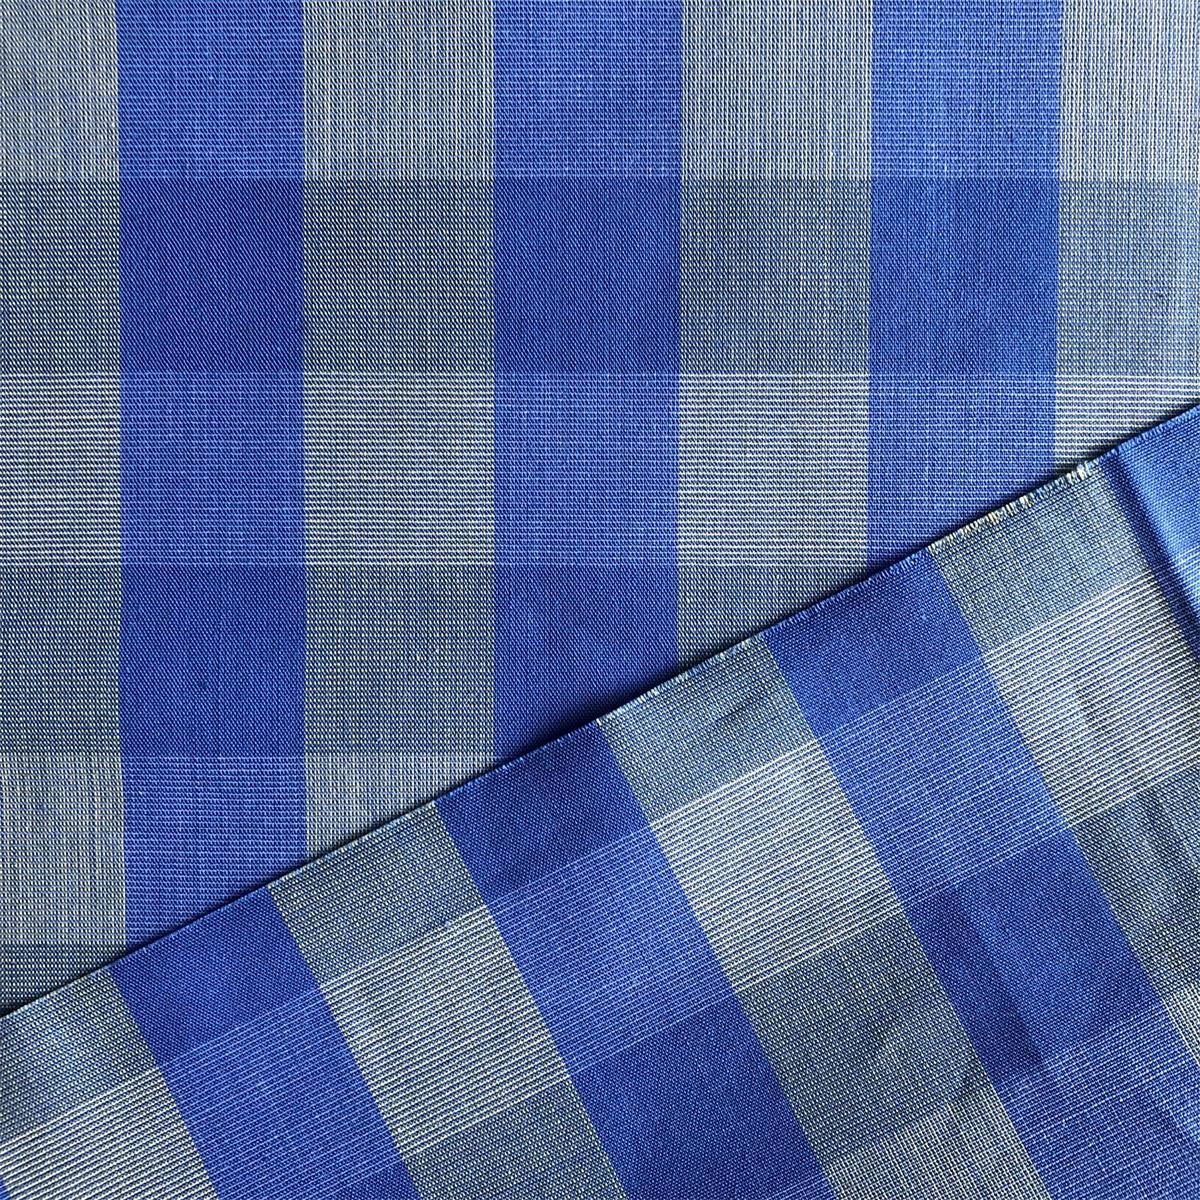 Cotton Yarn Dyed Fabric by compact yarn 100% cotton yarn dyed fil-a-fil plain check shirts woven fabric soft comfortable